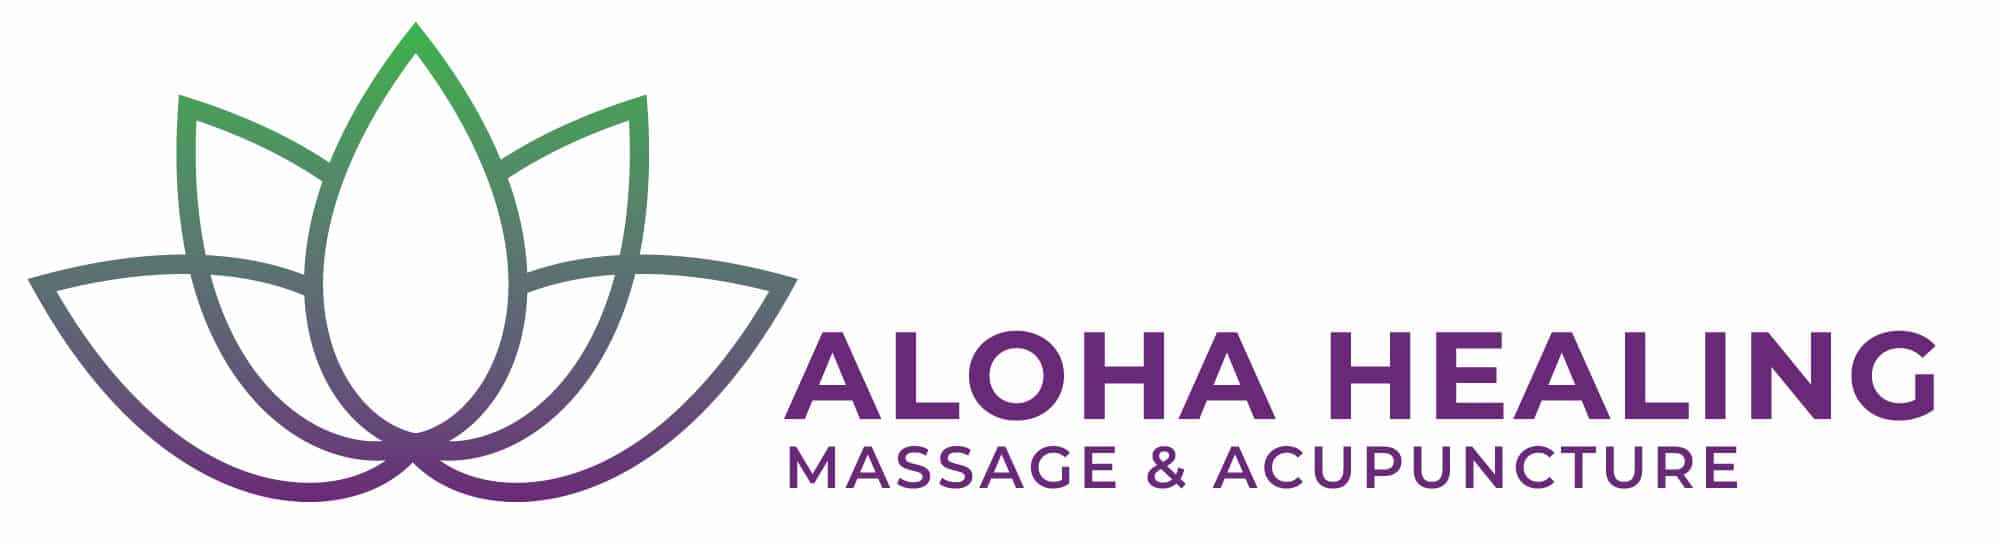 Aloha Healing Arts Logo Wide